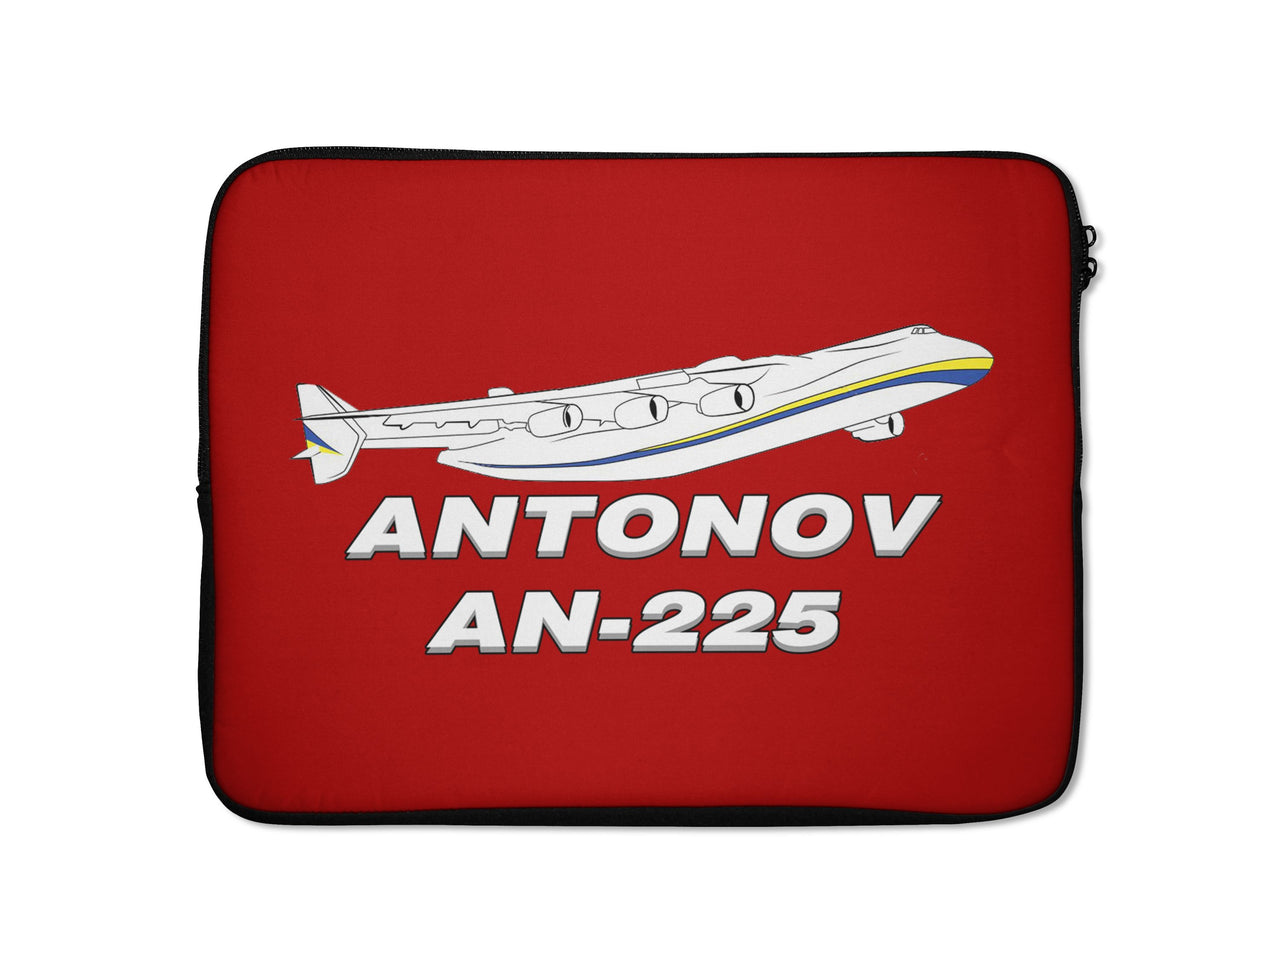 Antonov AN-225 (27) Designed Laptop & Tablet Cases